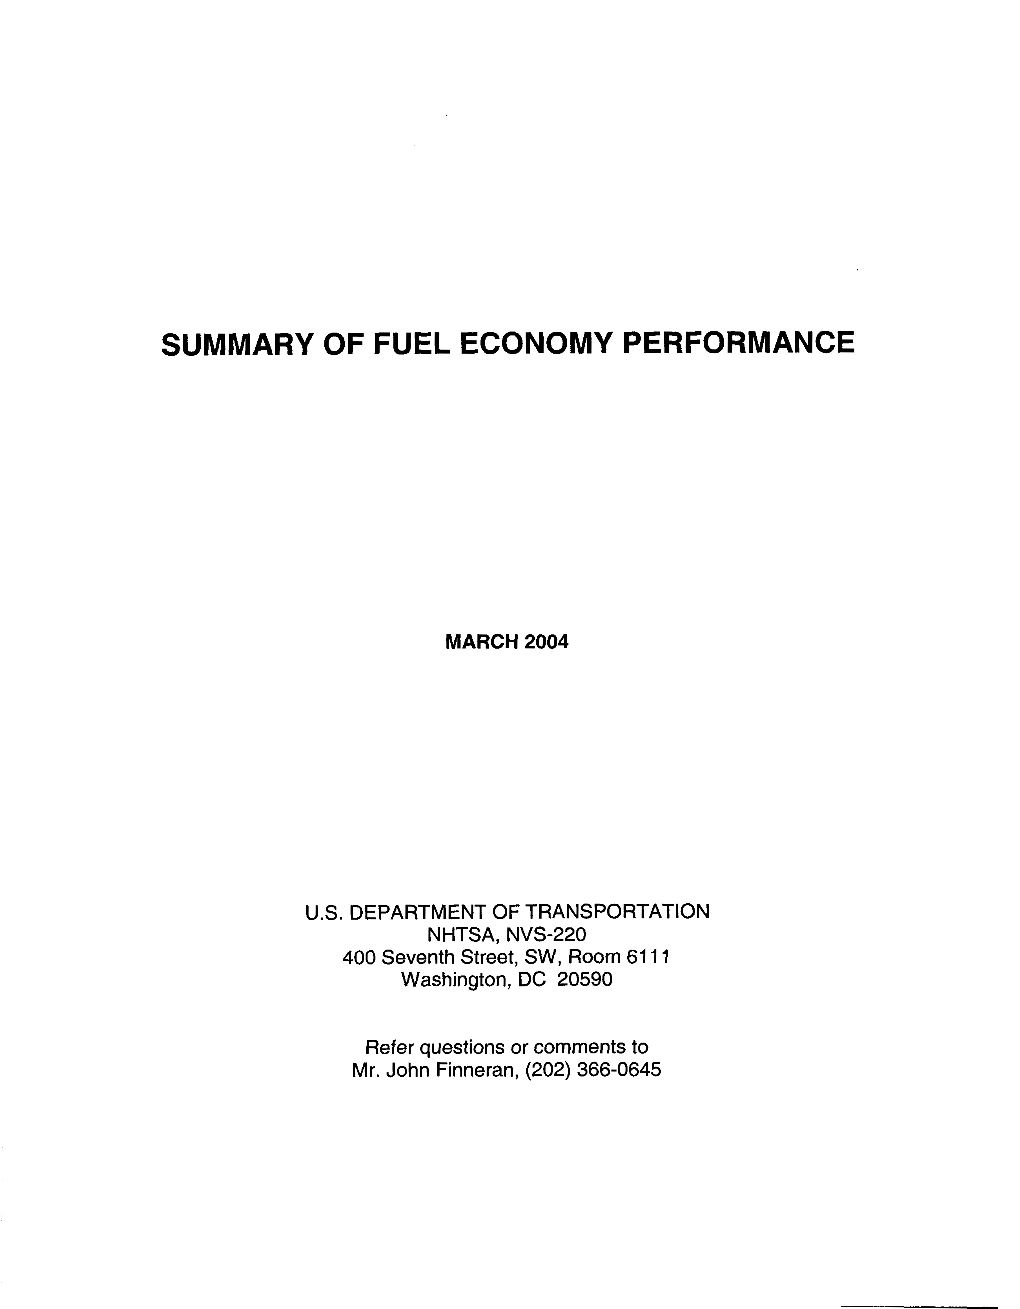 Summary of Fuel Economy Performance